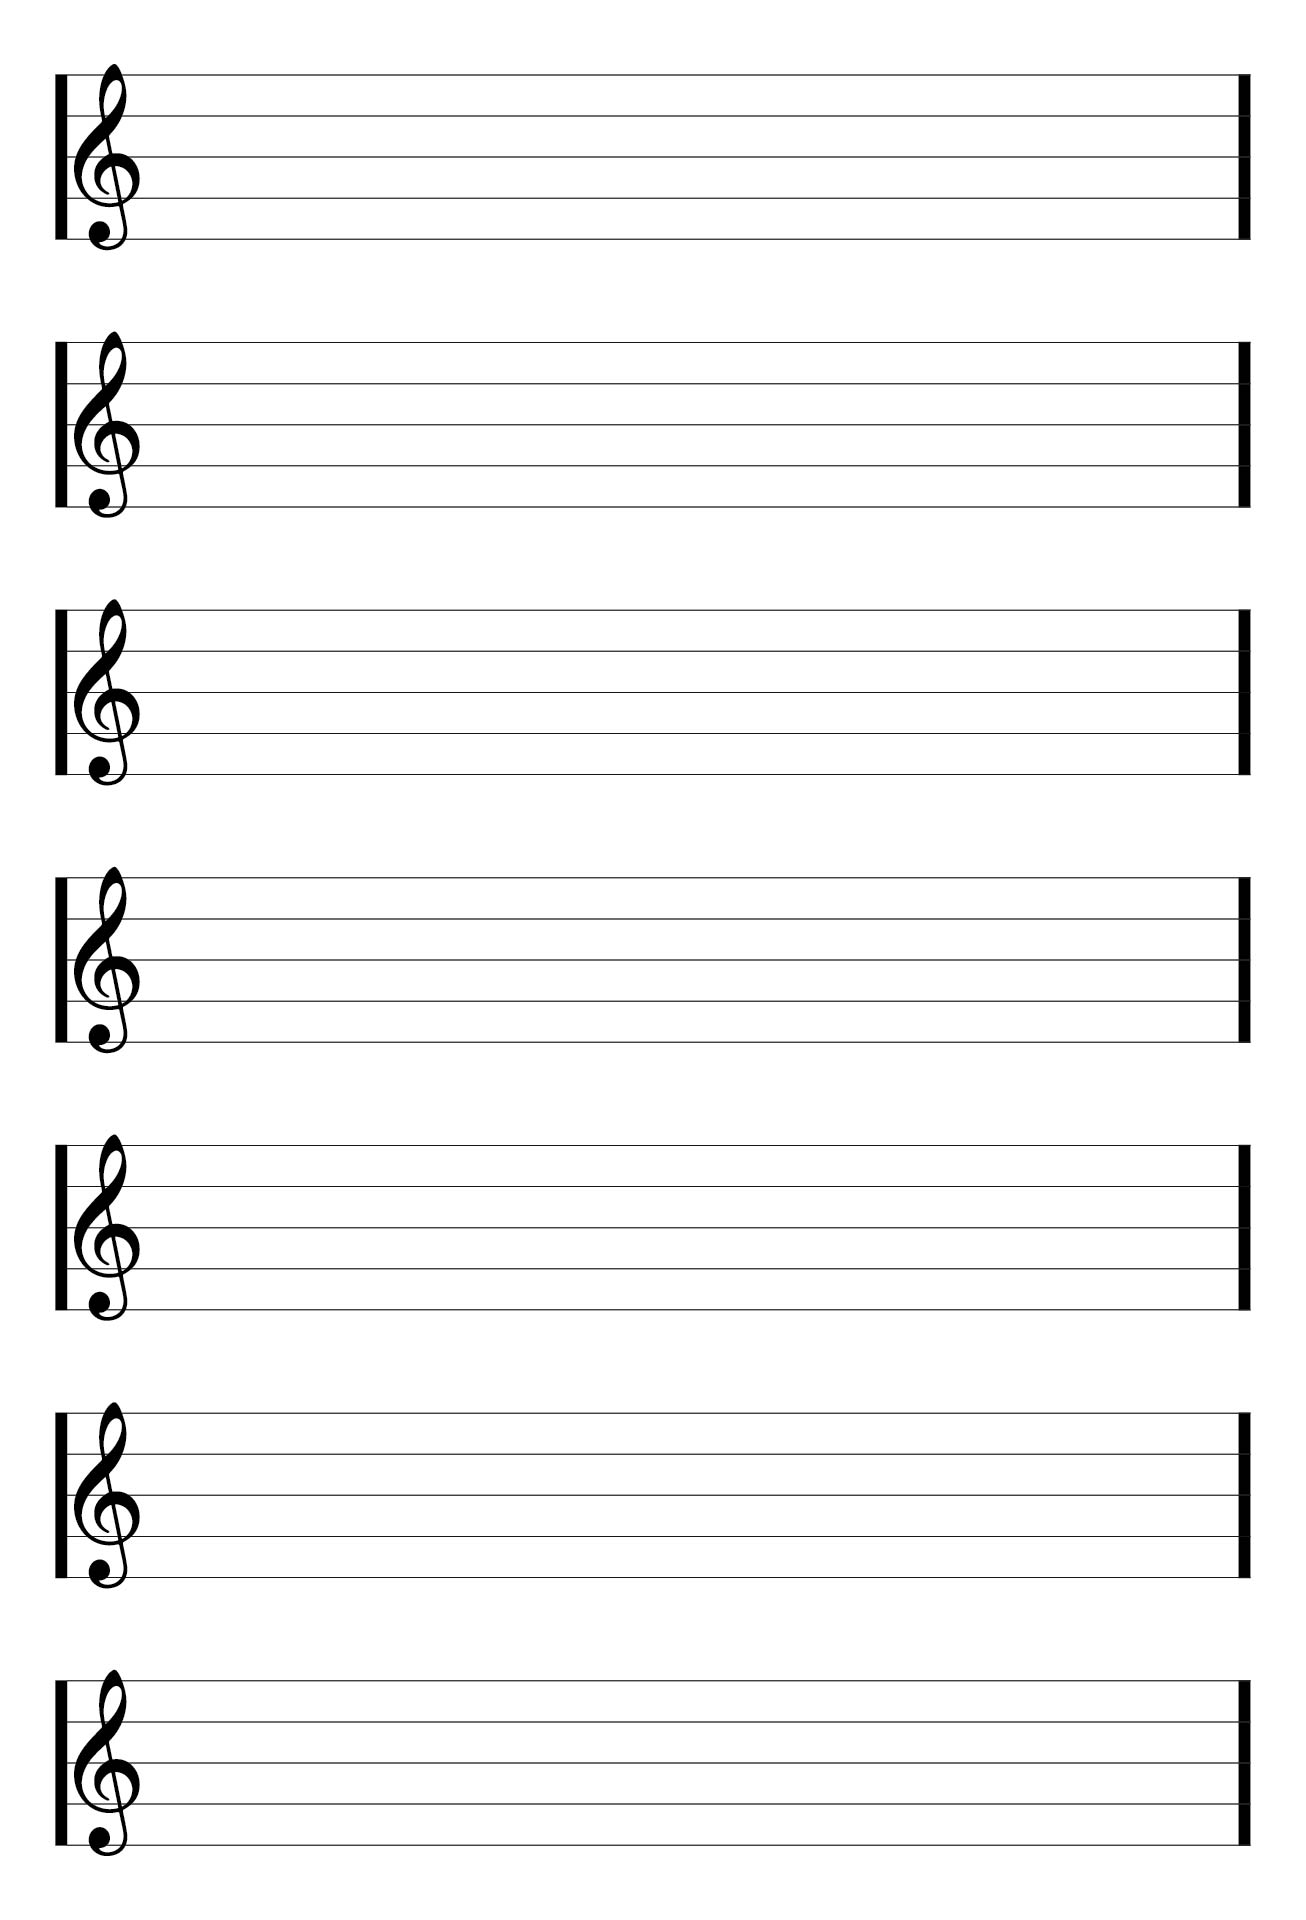 muncie music manuscript paper